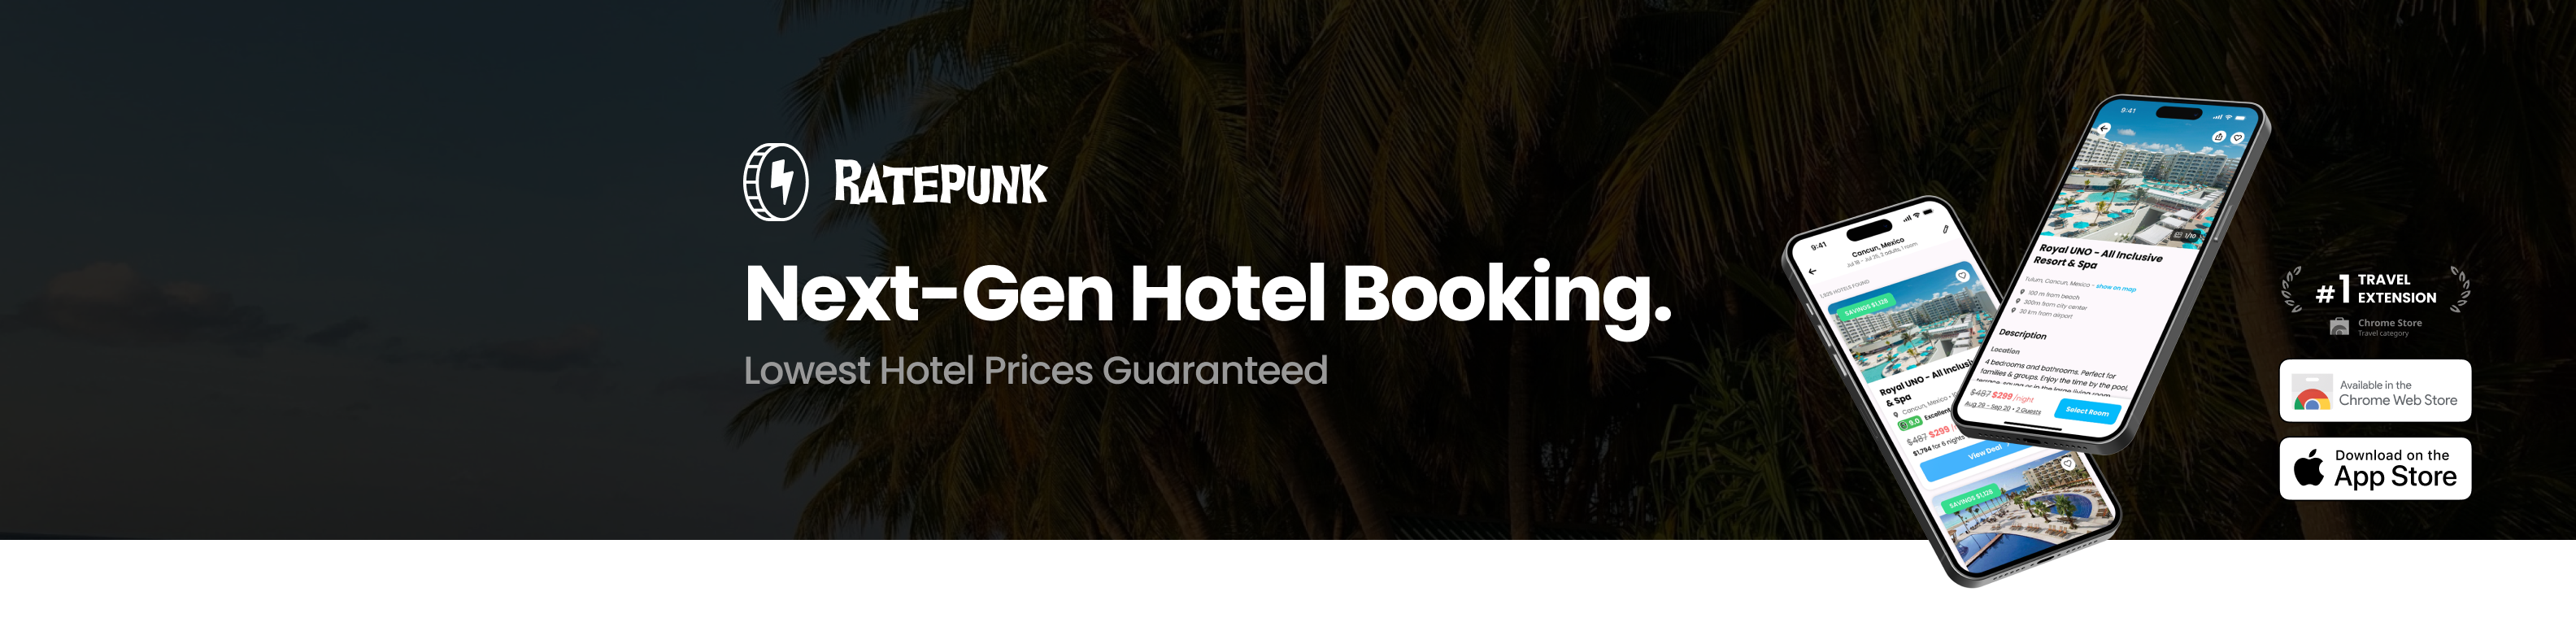 Ratepunk -hotel price comparison tool 